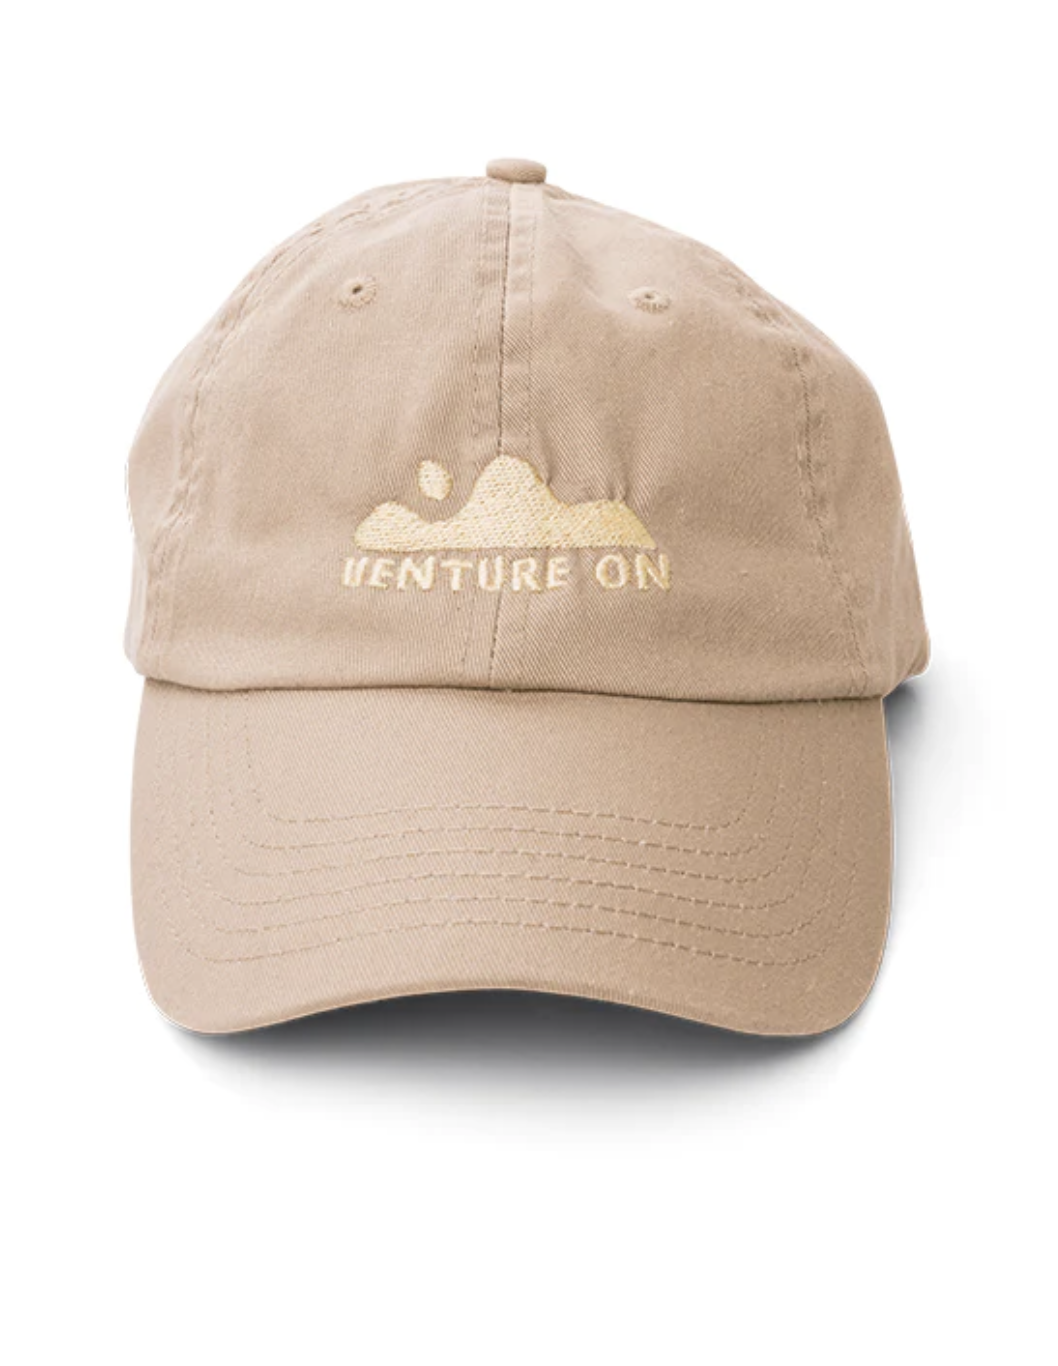 Venture On Hat